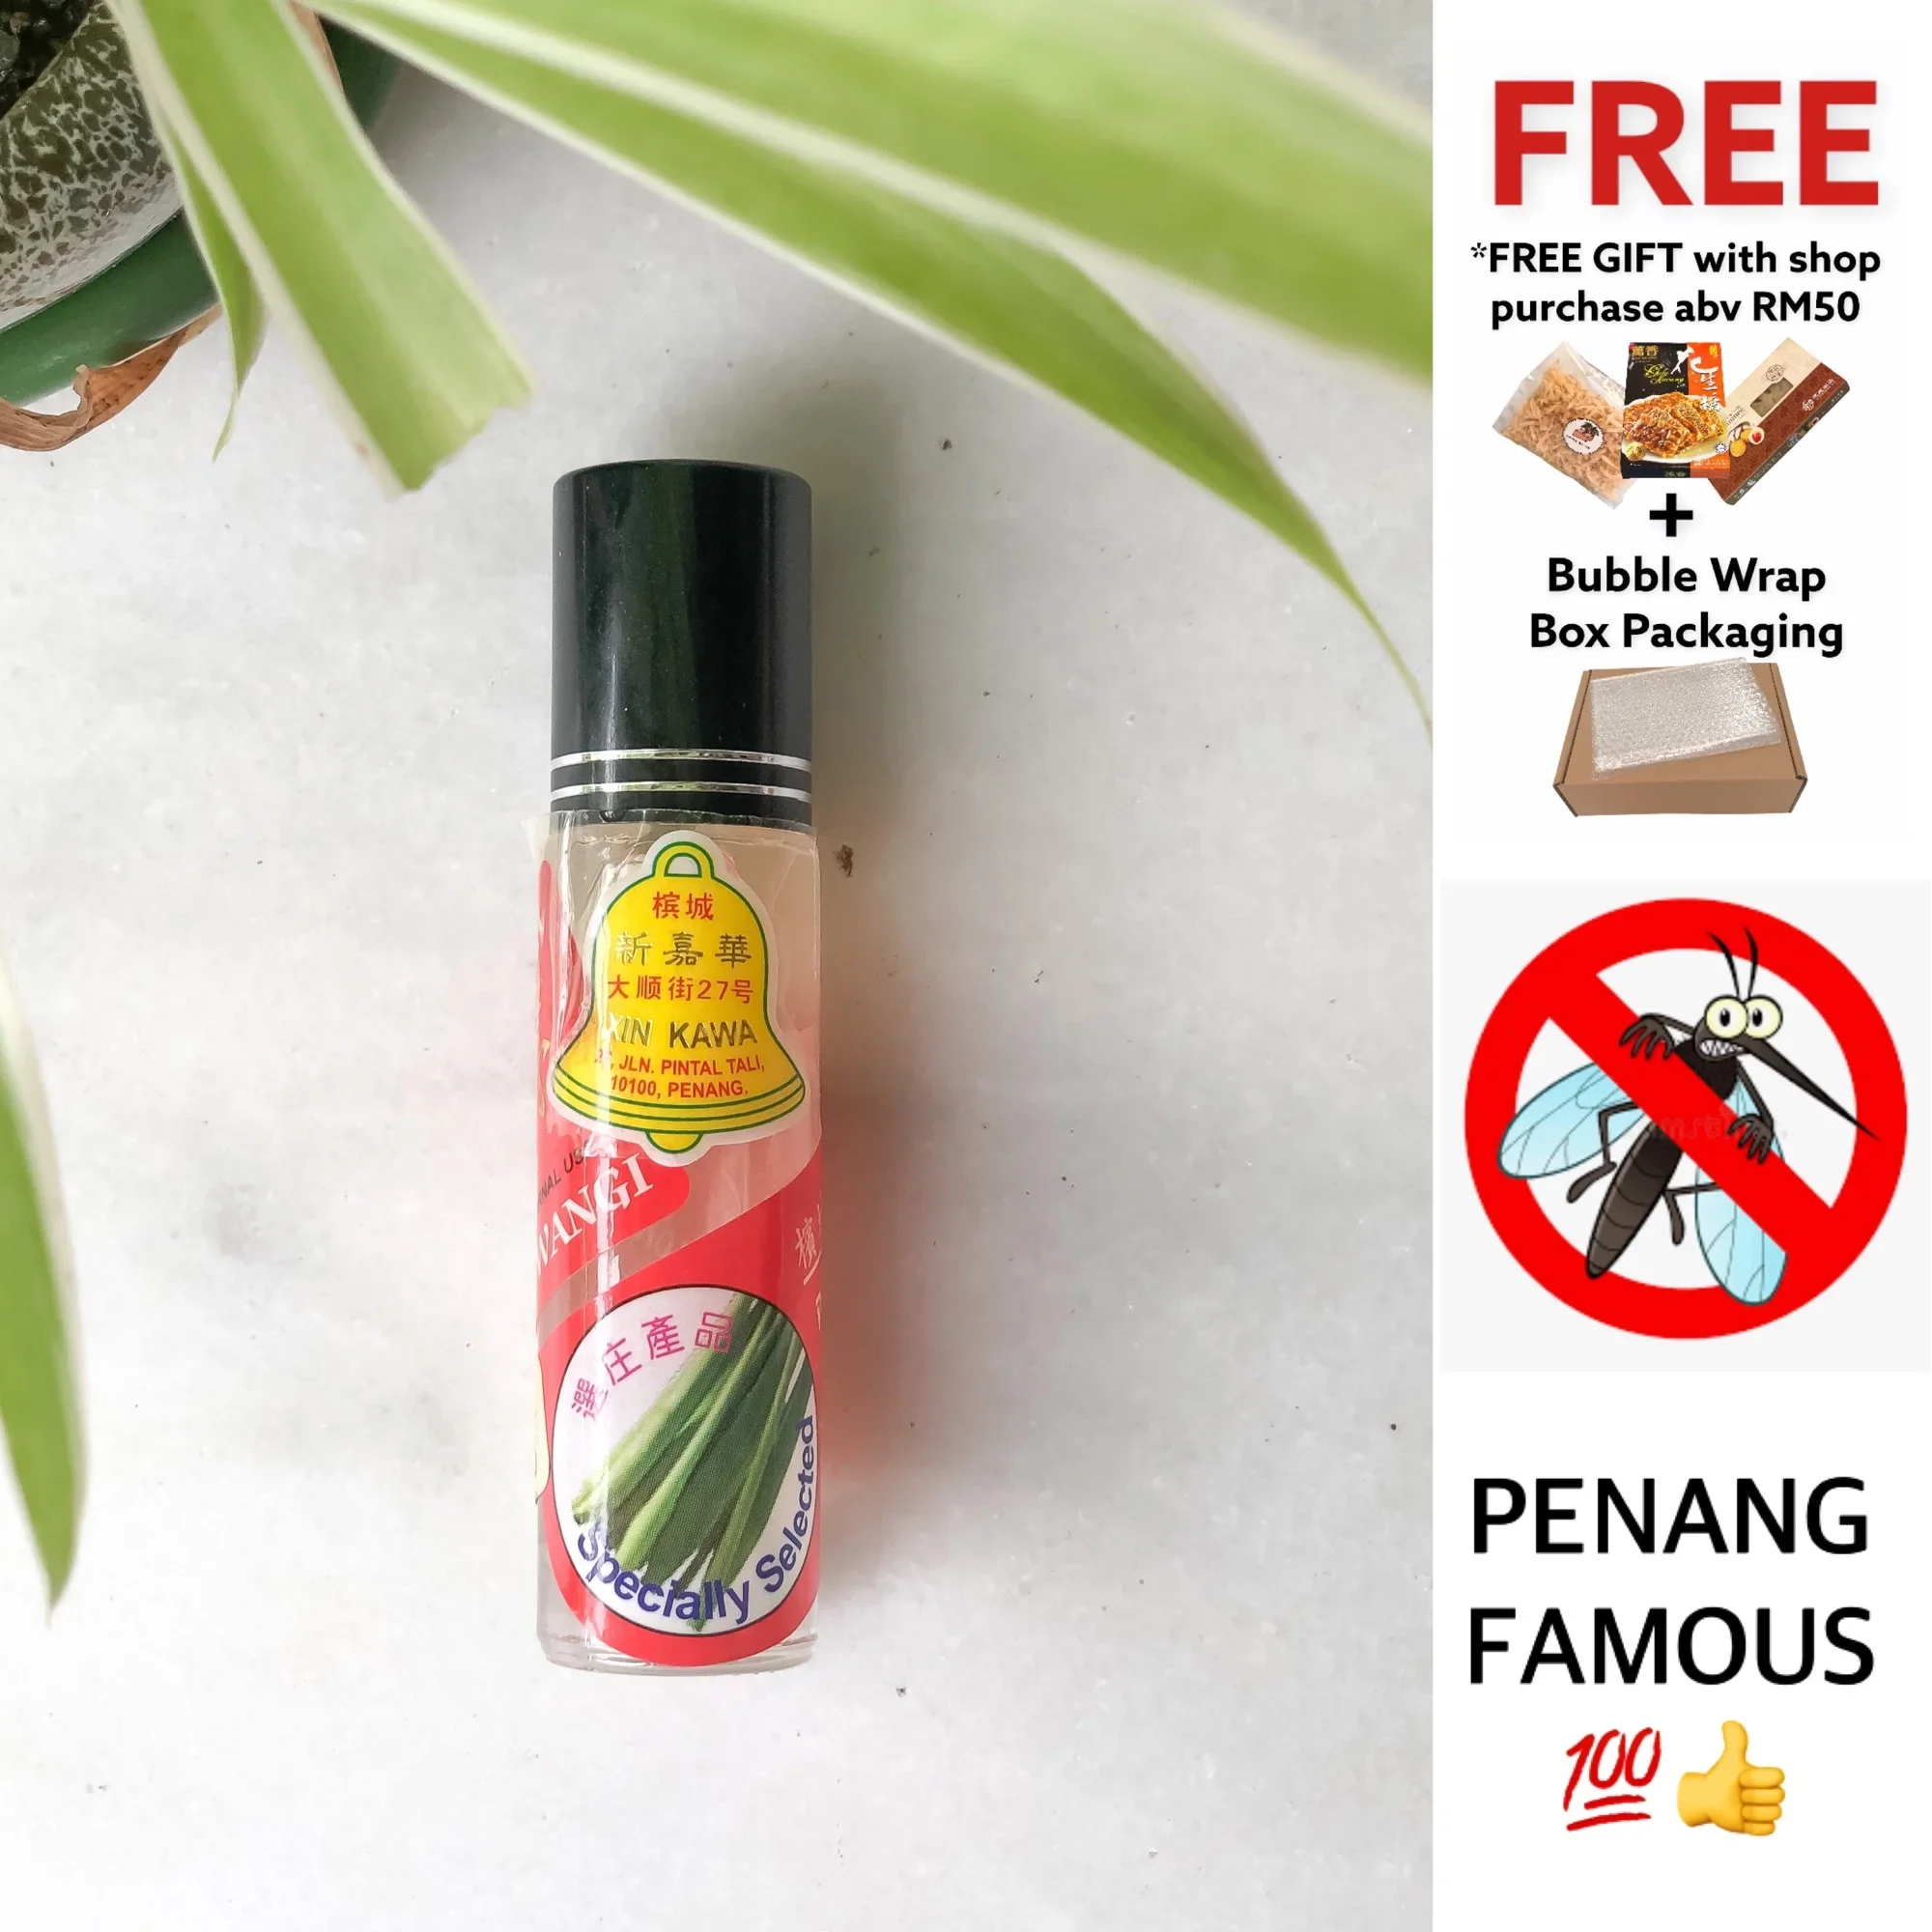 (Penanginabox) Penang Original 100% Xin Kawa Lemongrass Oil Minyak Serai Lemon Grass Extract Citronella Oil Mosquito Repellant Penang Food